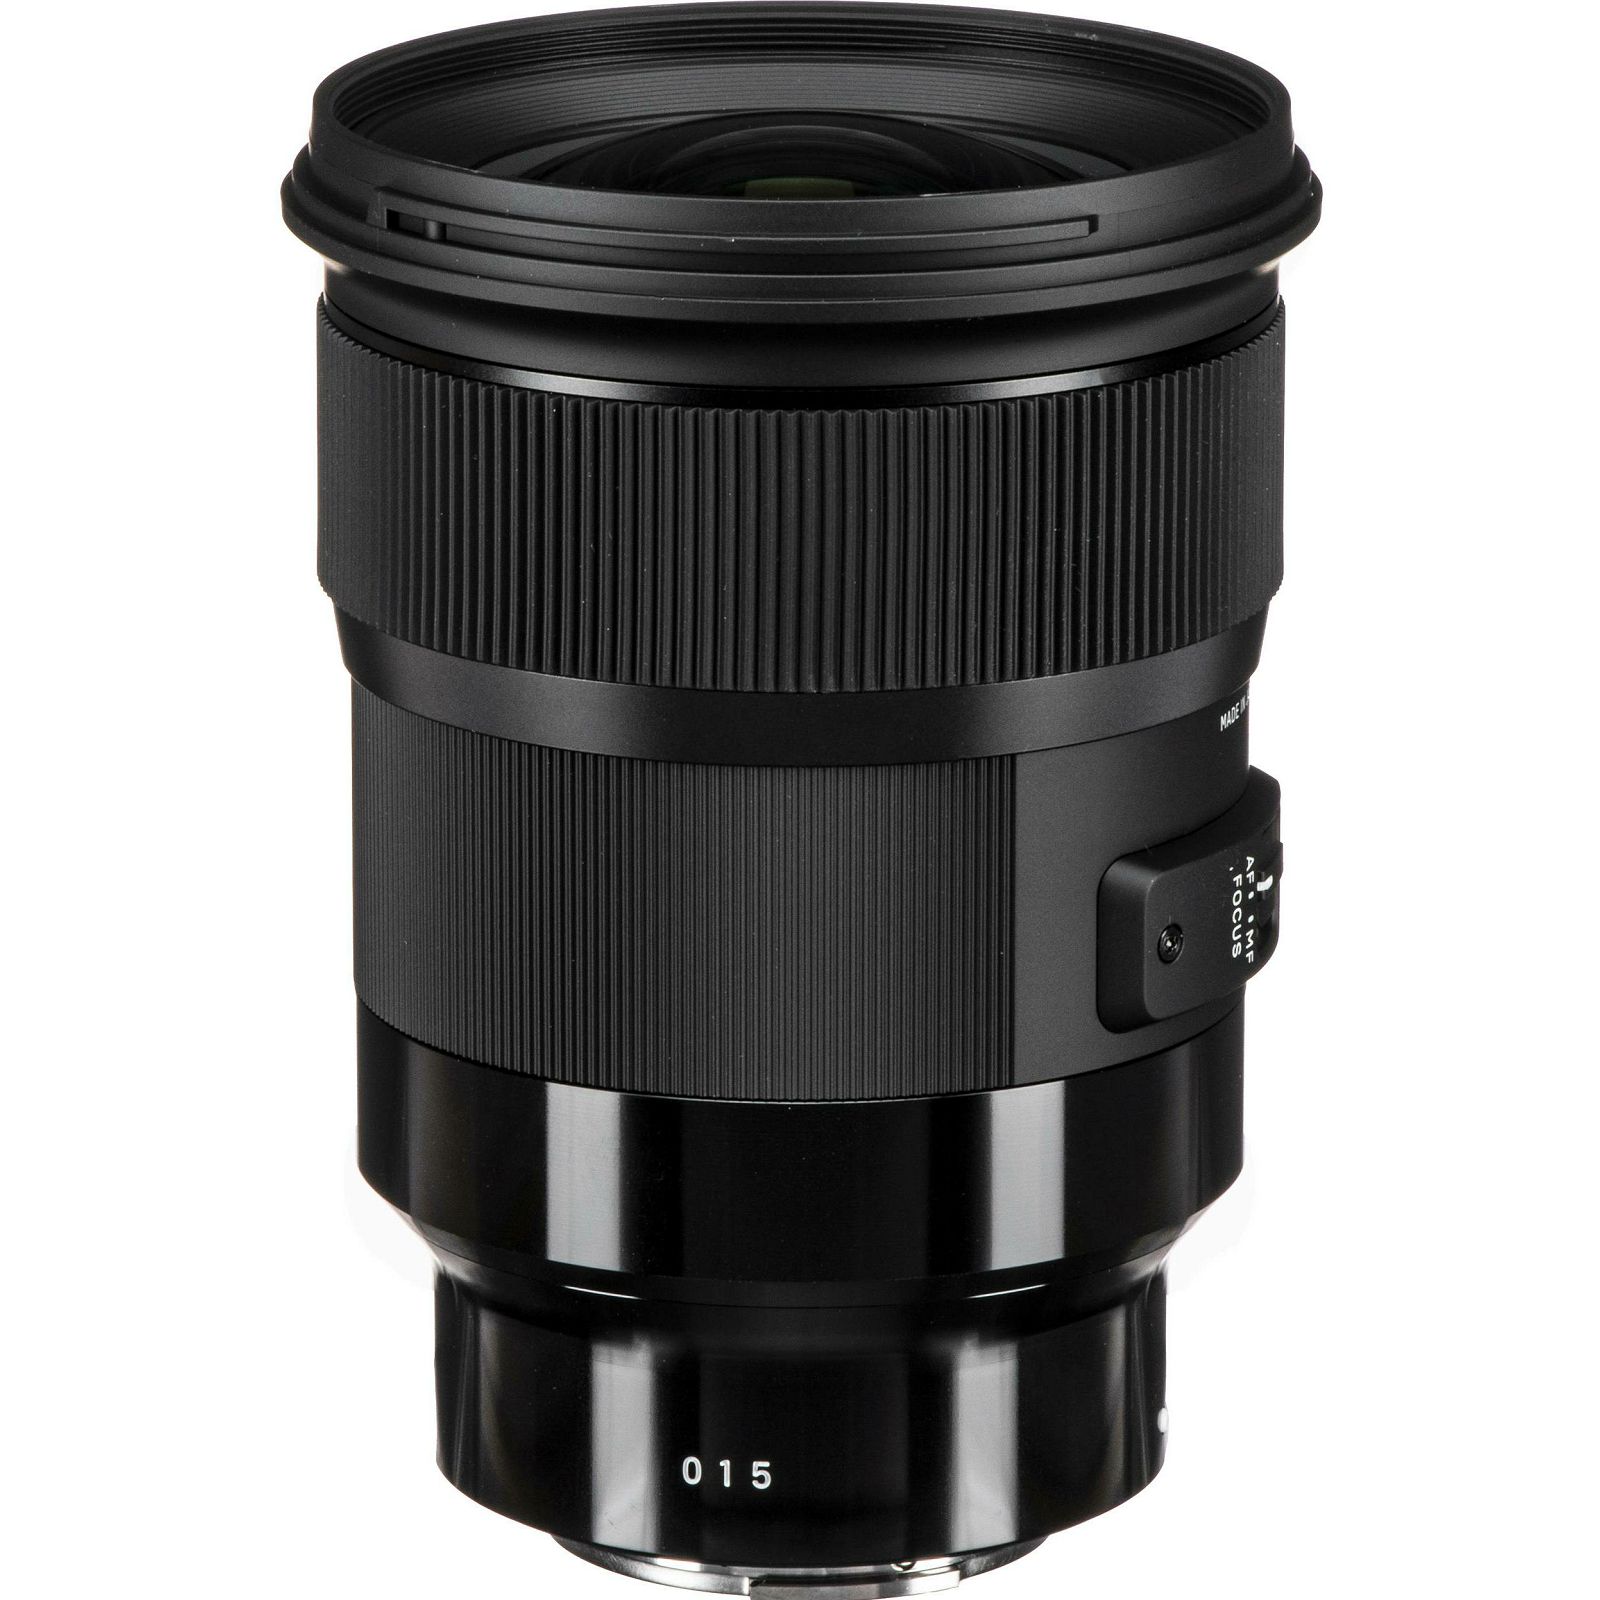 Sigma 24mm f/1.4 DG HSM ART objektiv za Panasonic Leica L-mount